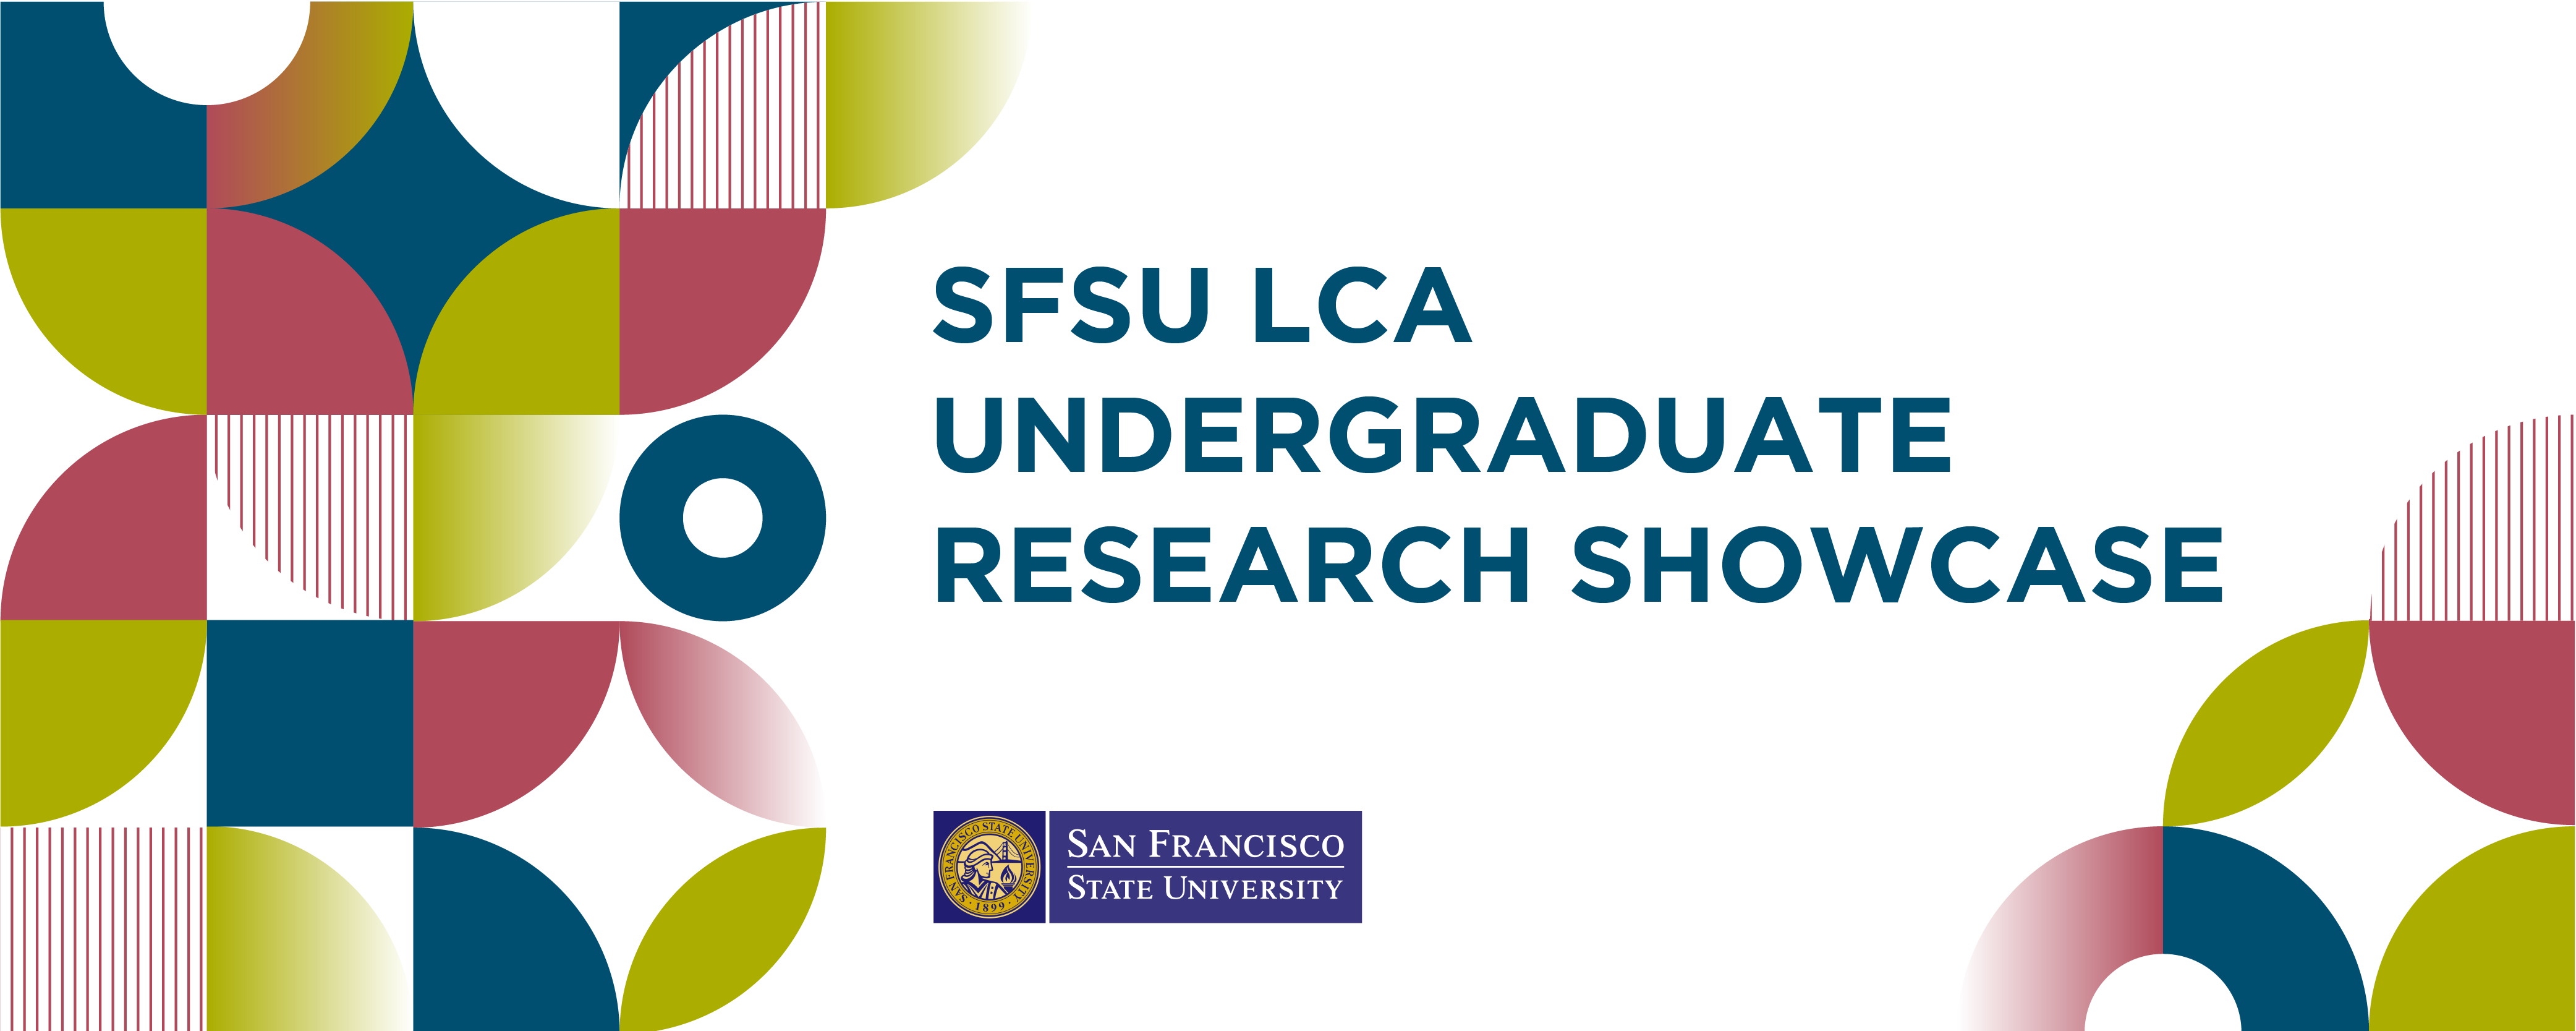 Pattern design with text SFSU LCA Undergraduate Research Showcase